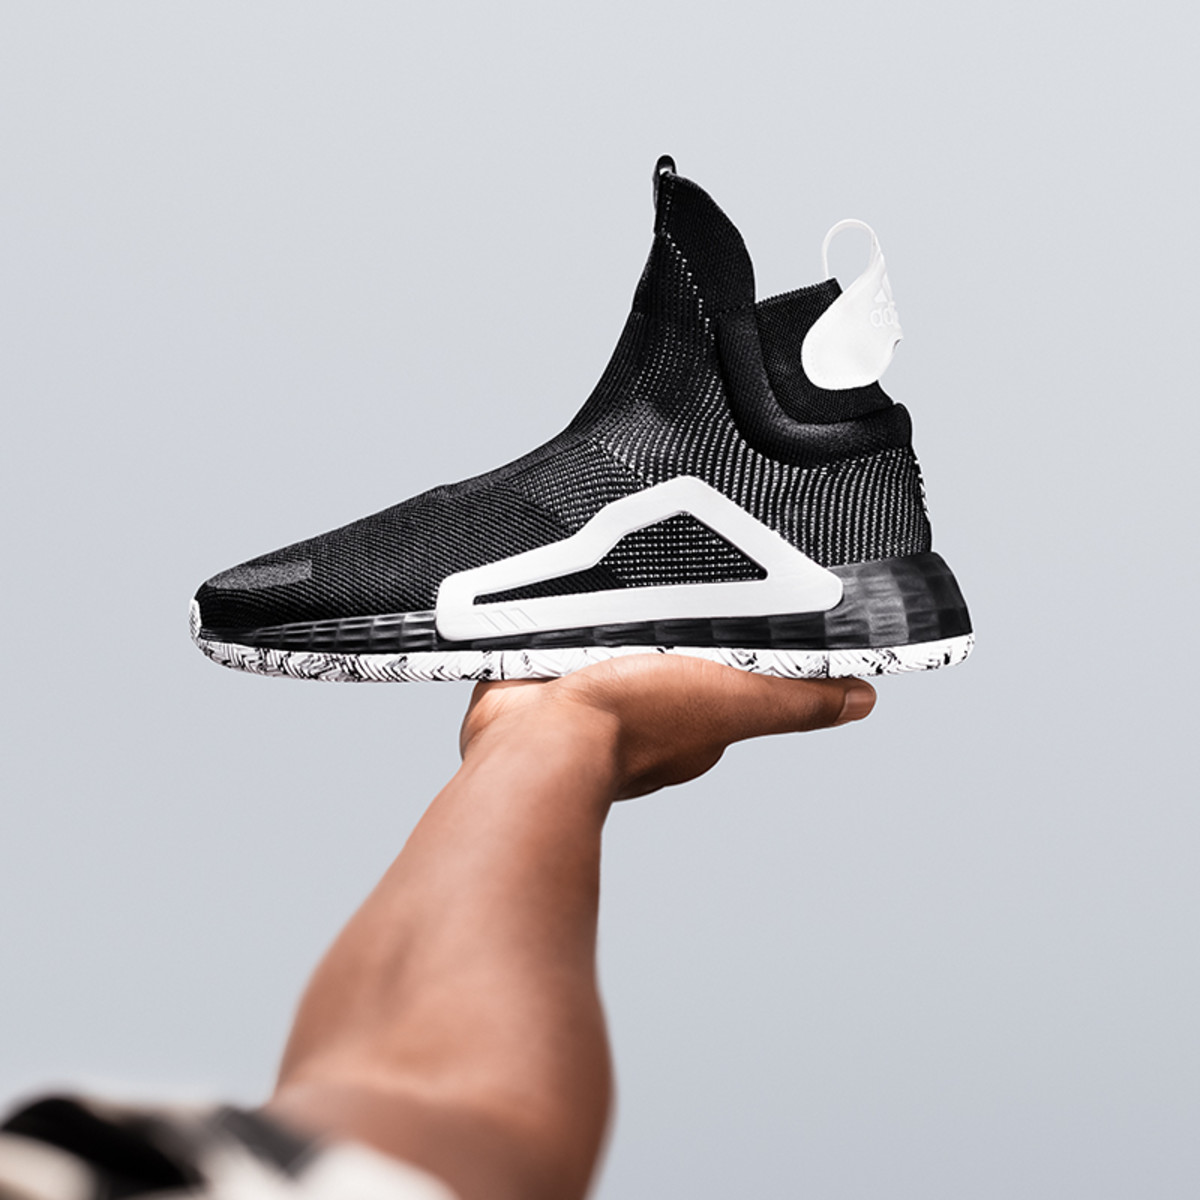 adidas first basketball shoe